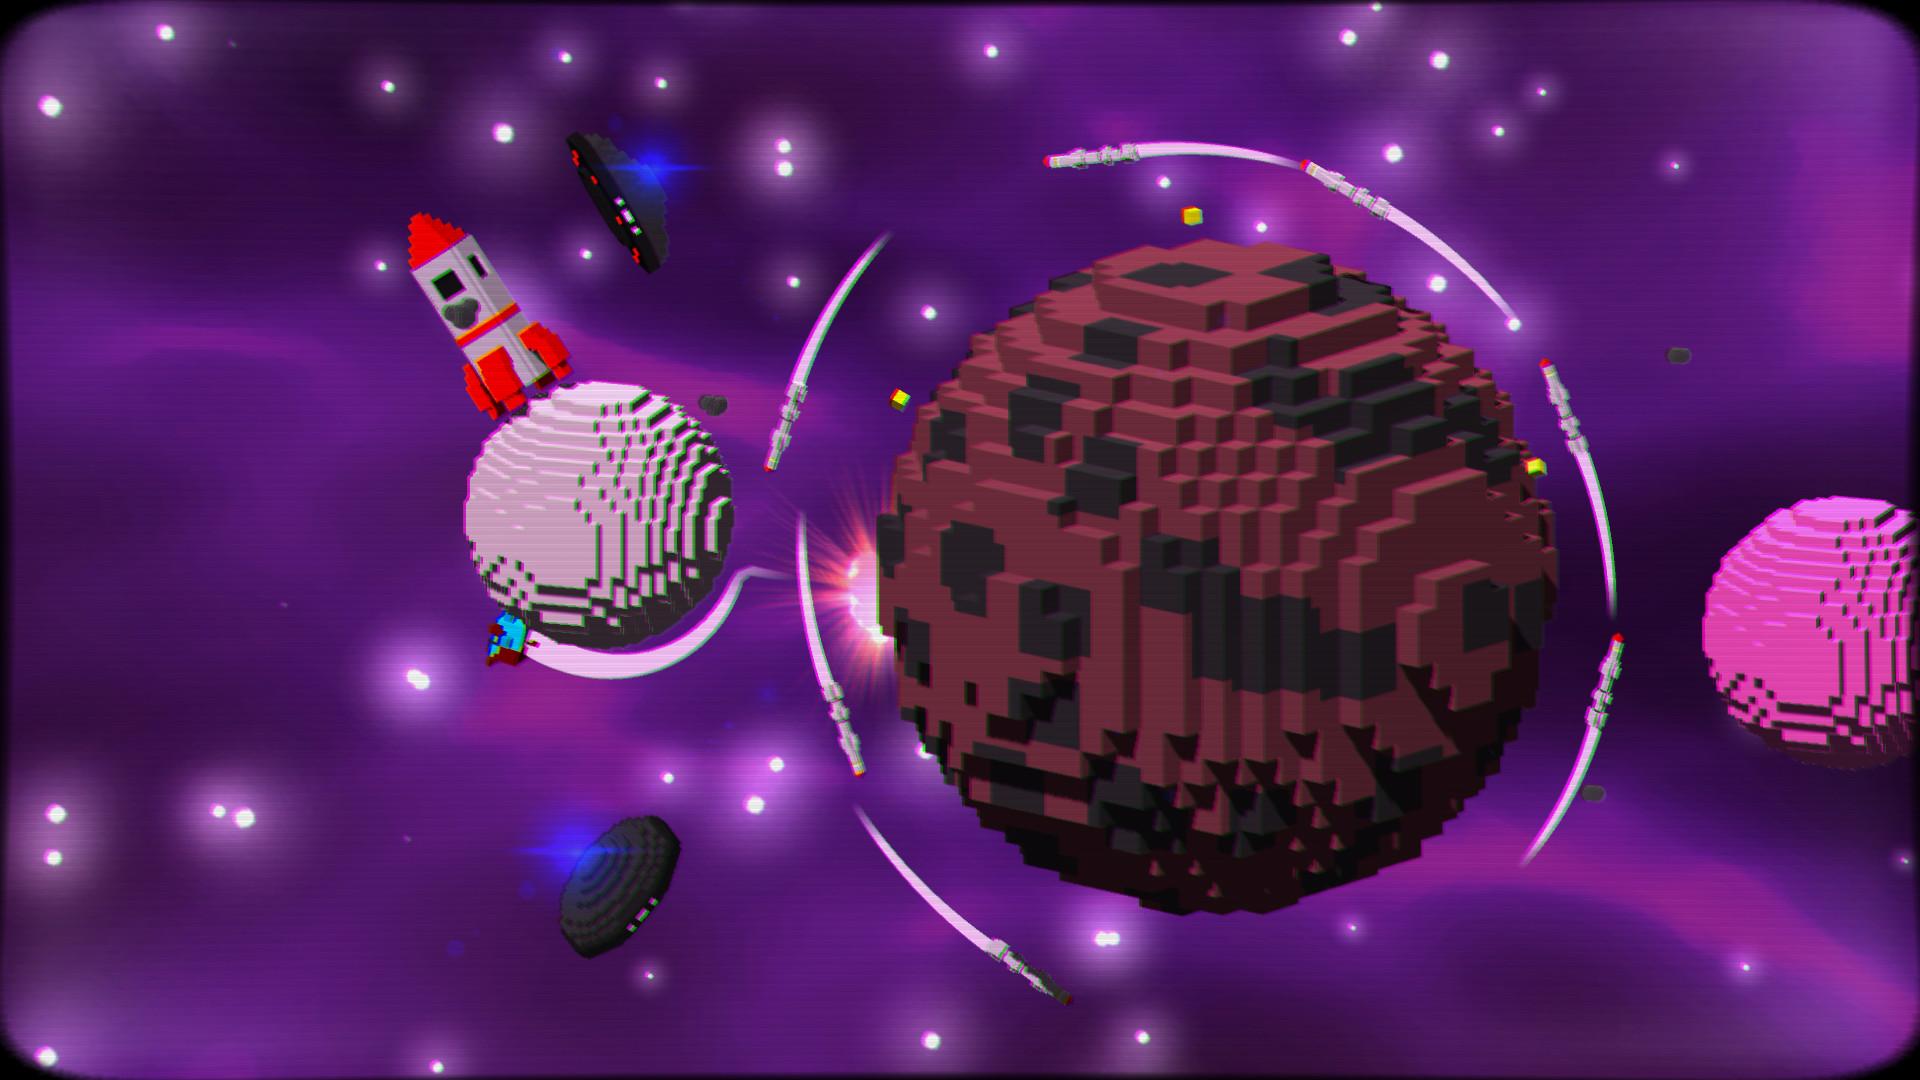 Screenshot №14 from game Cosmic Leap